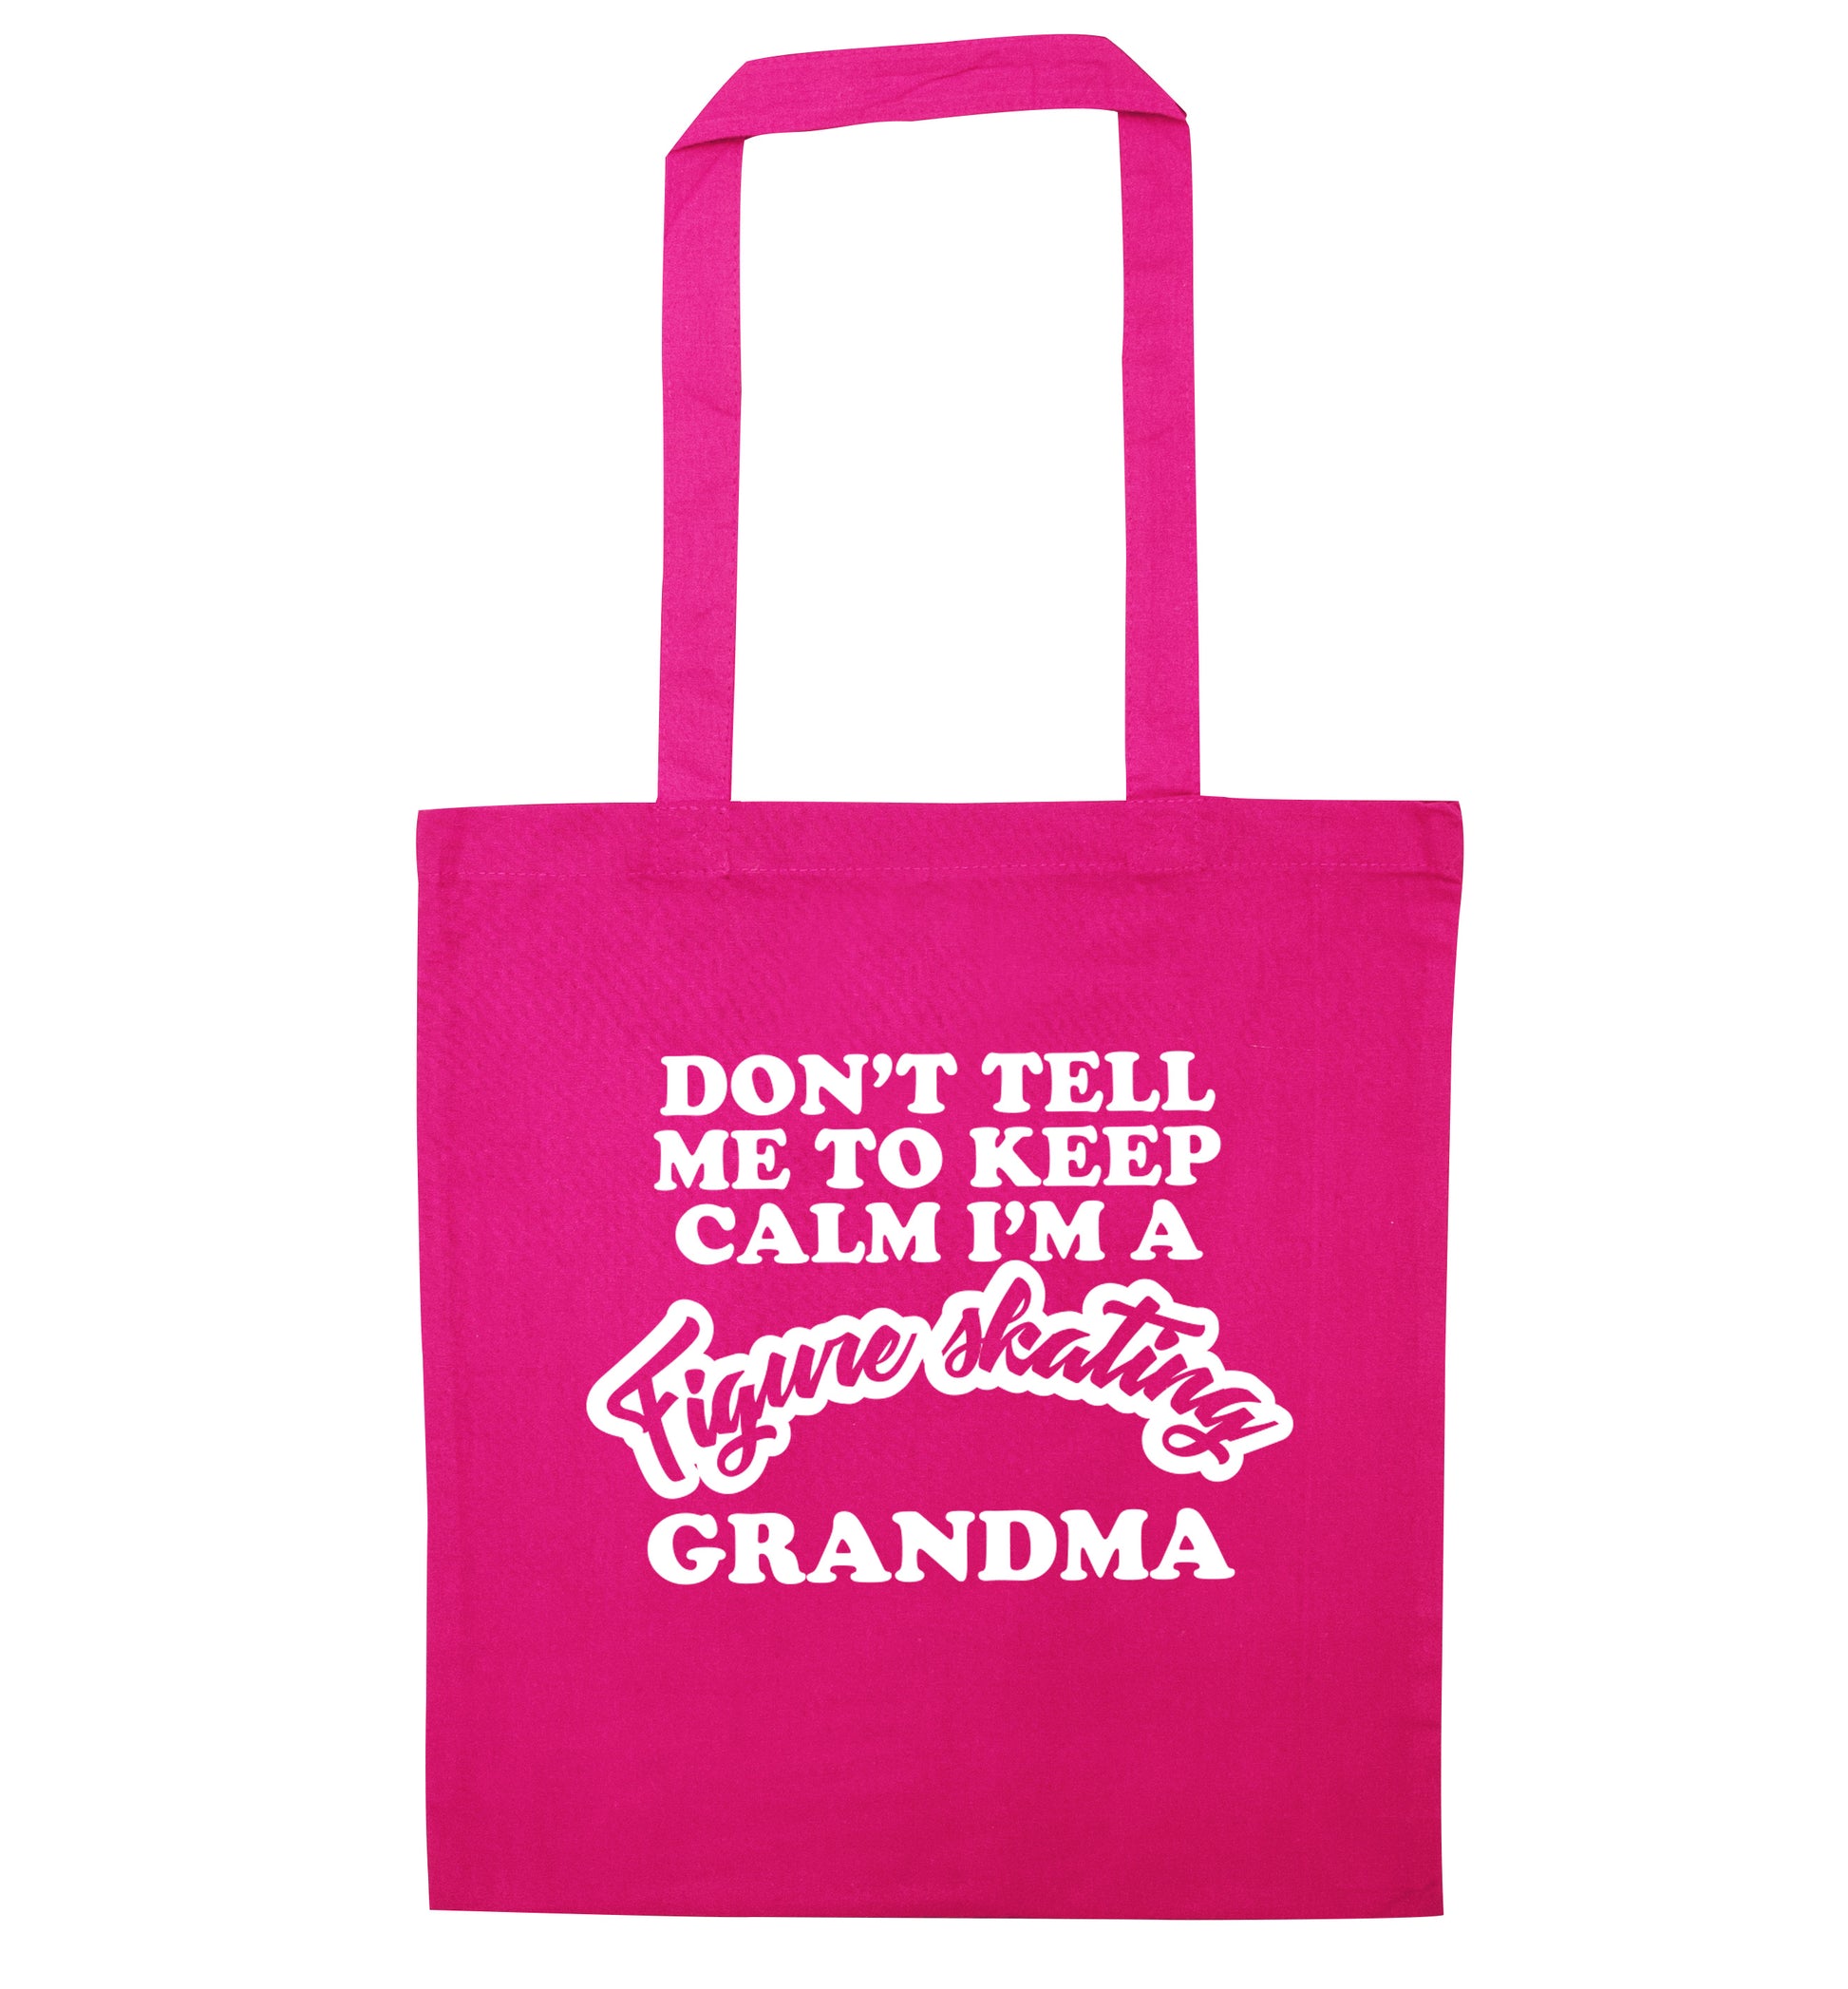 Don't tell me to keep calm I'm a figure skating grandma pink tote bag